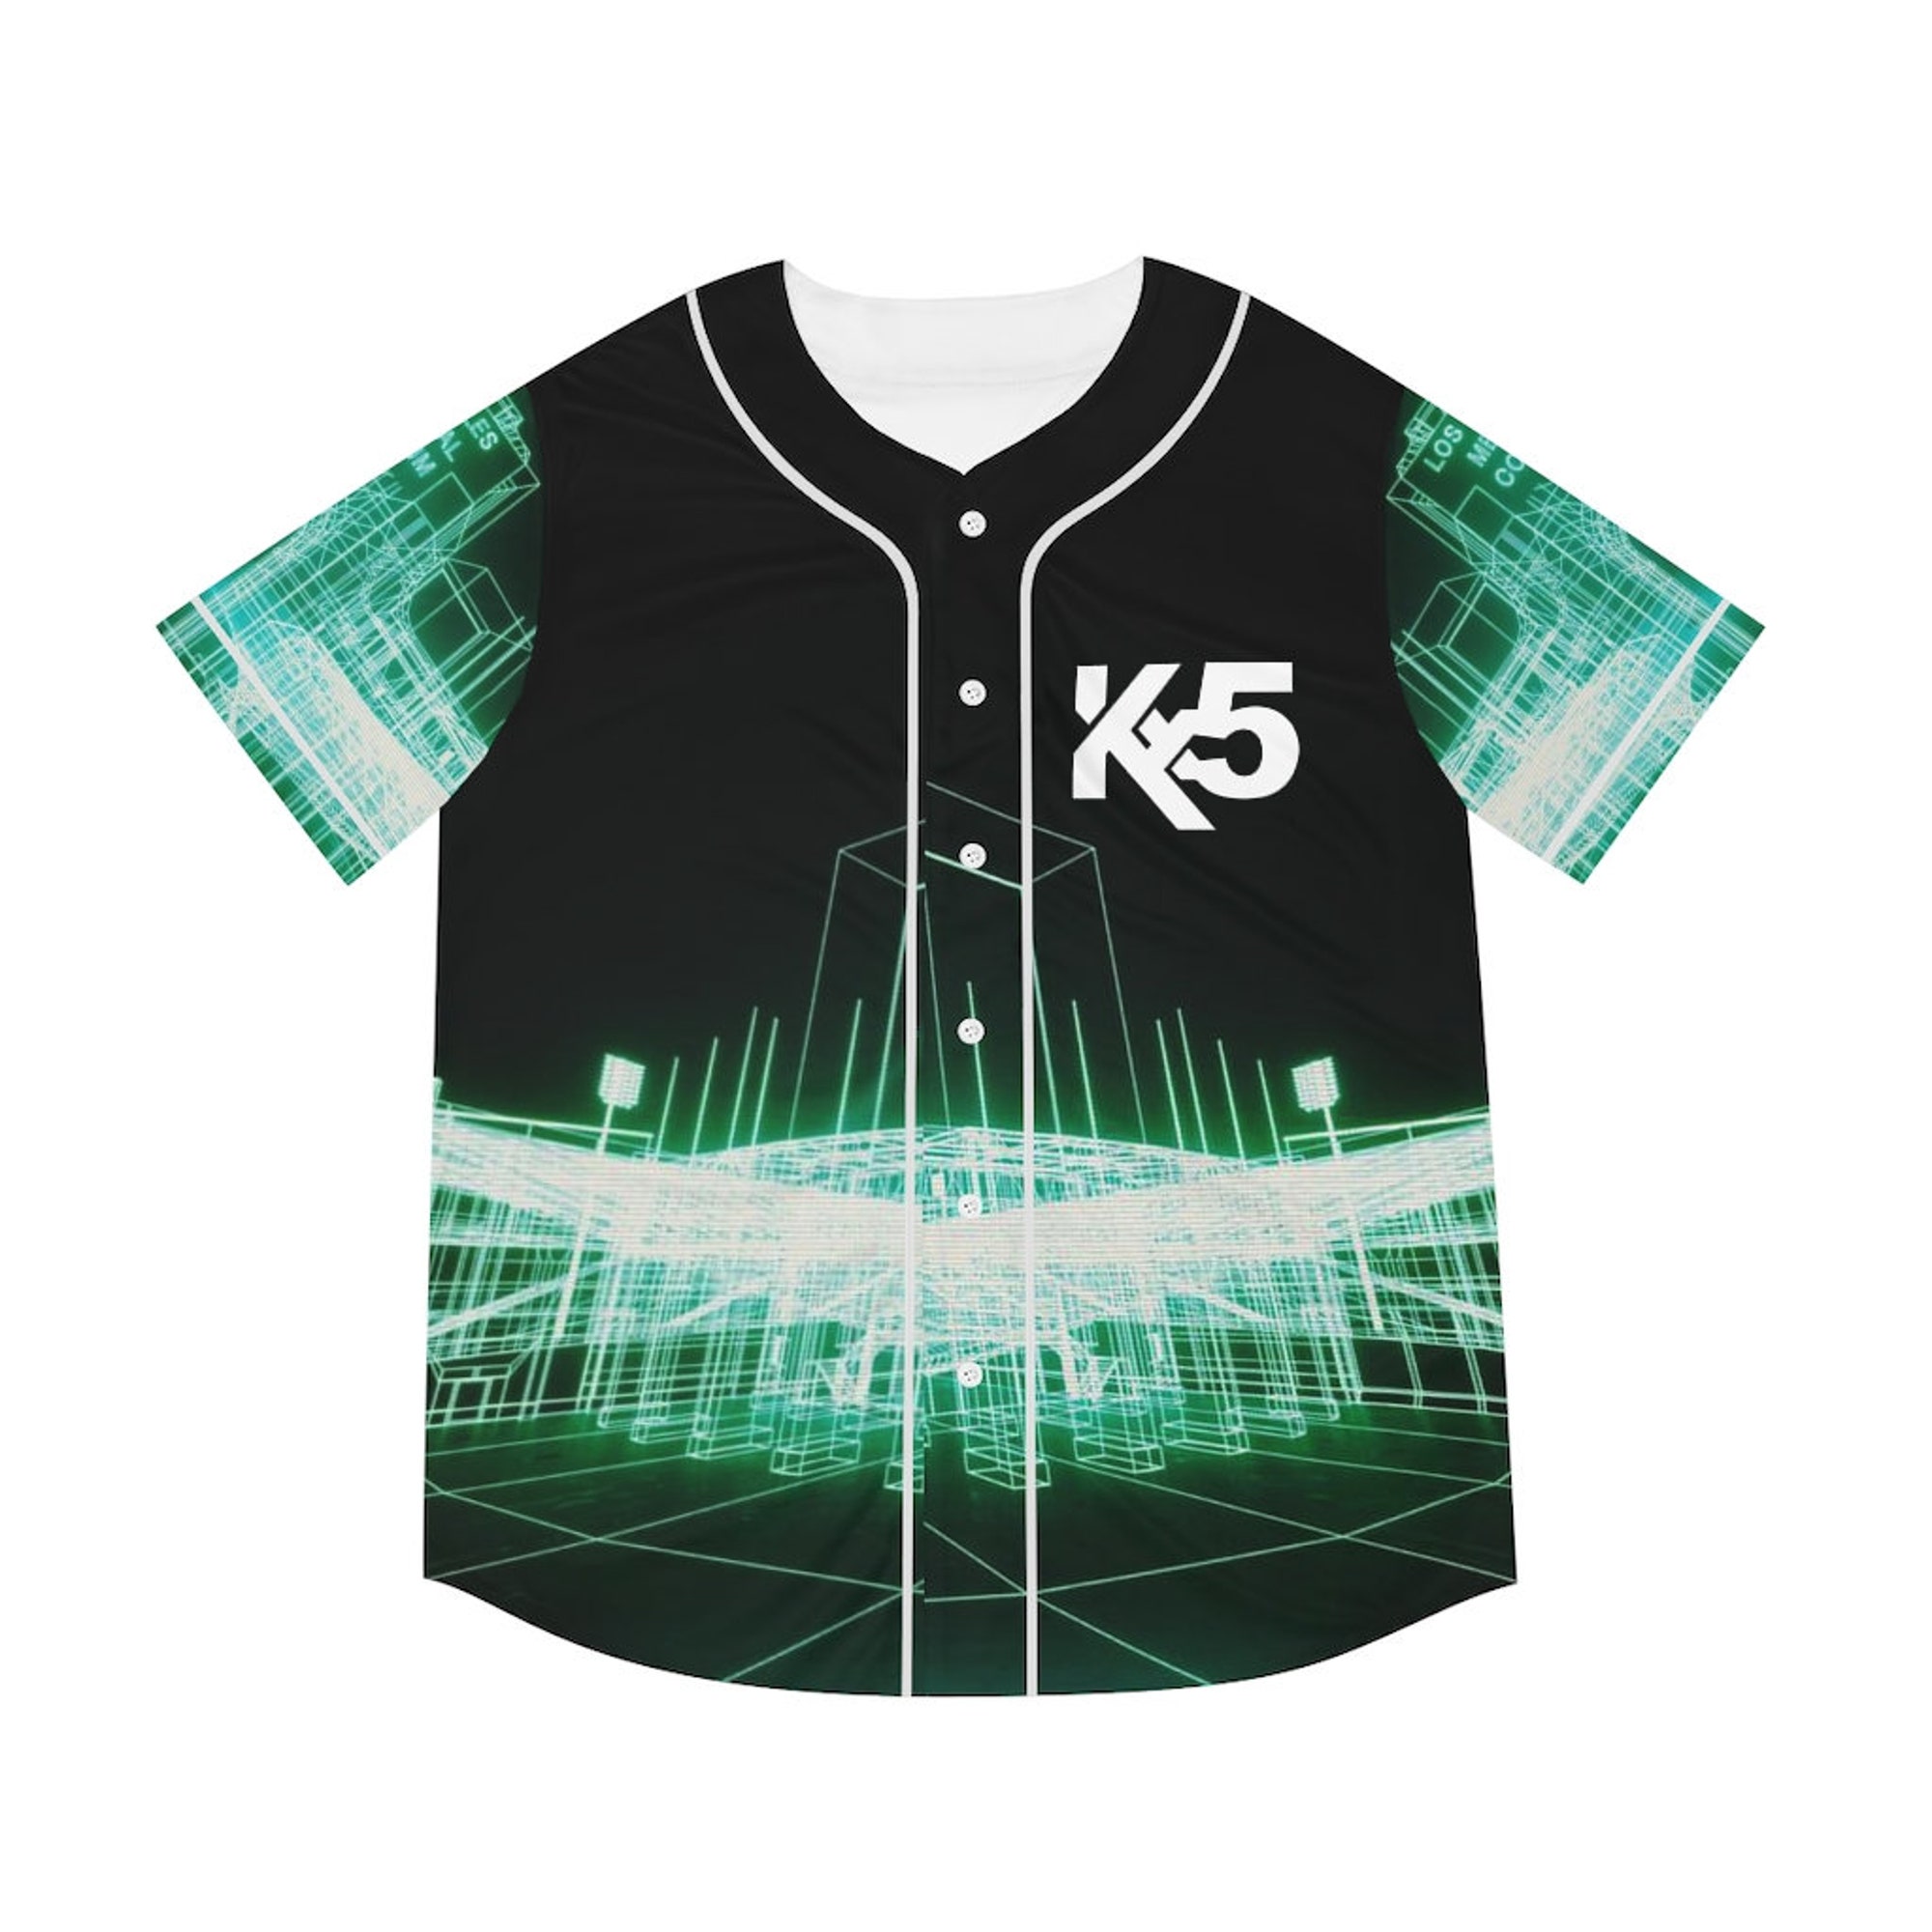 Kx5 Baseball Jerseys